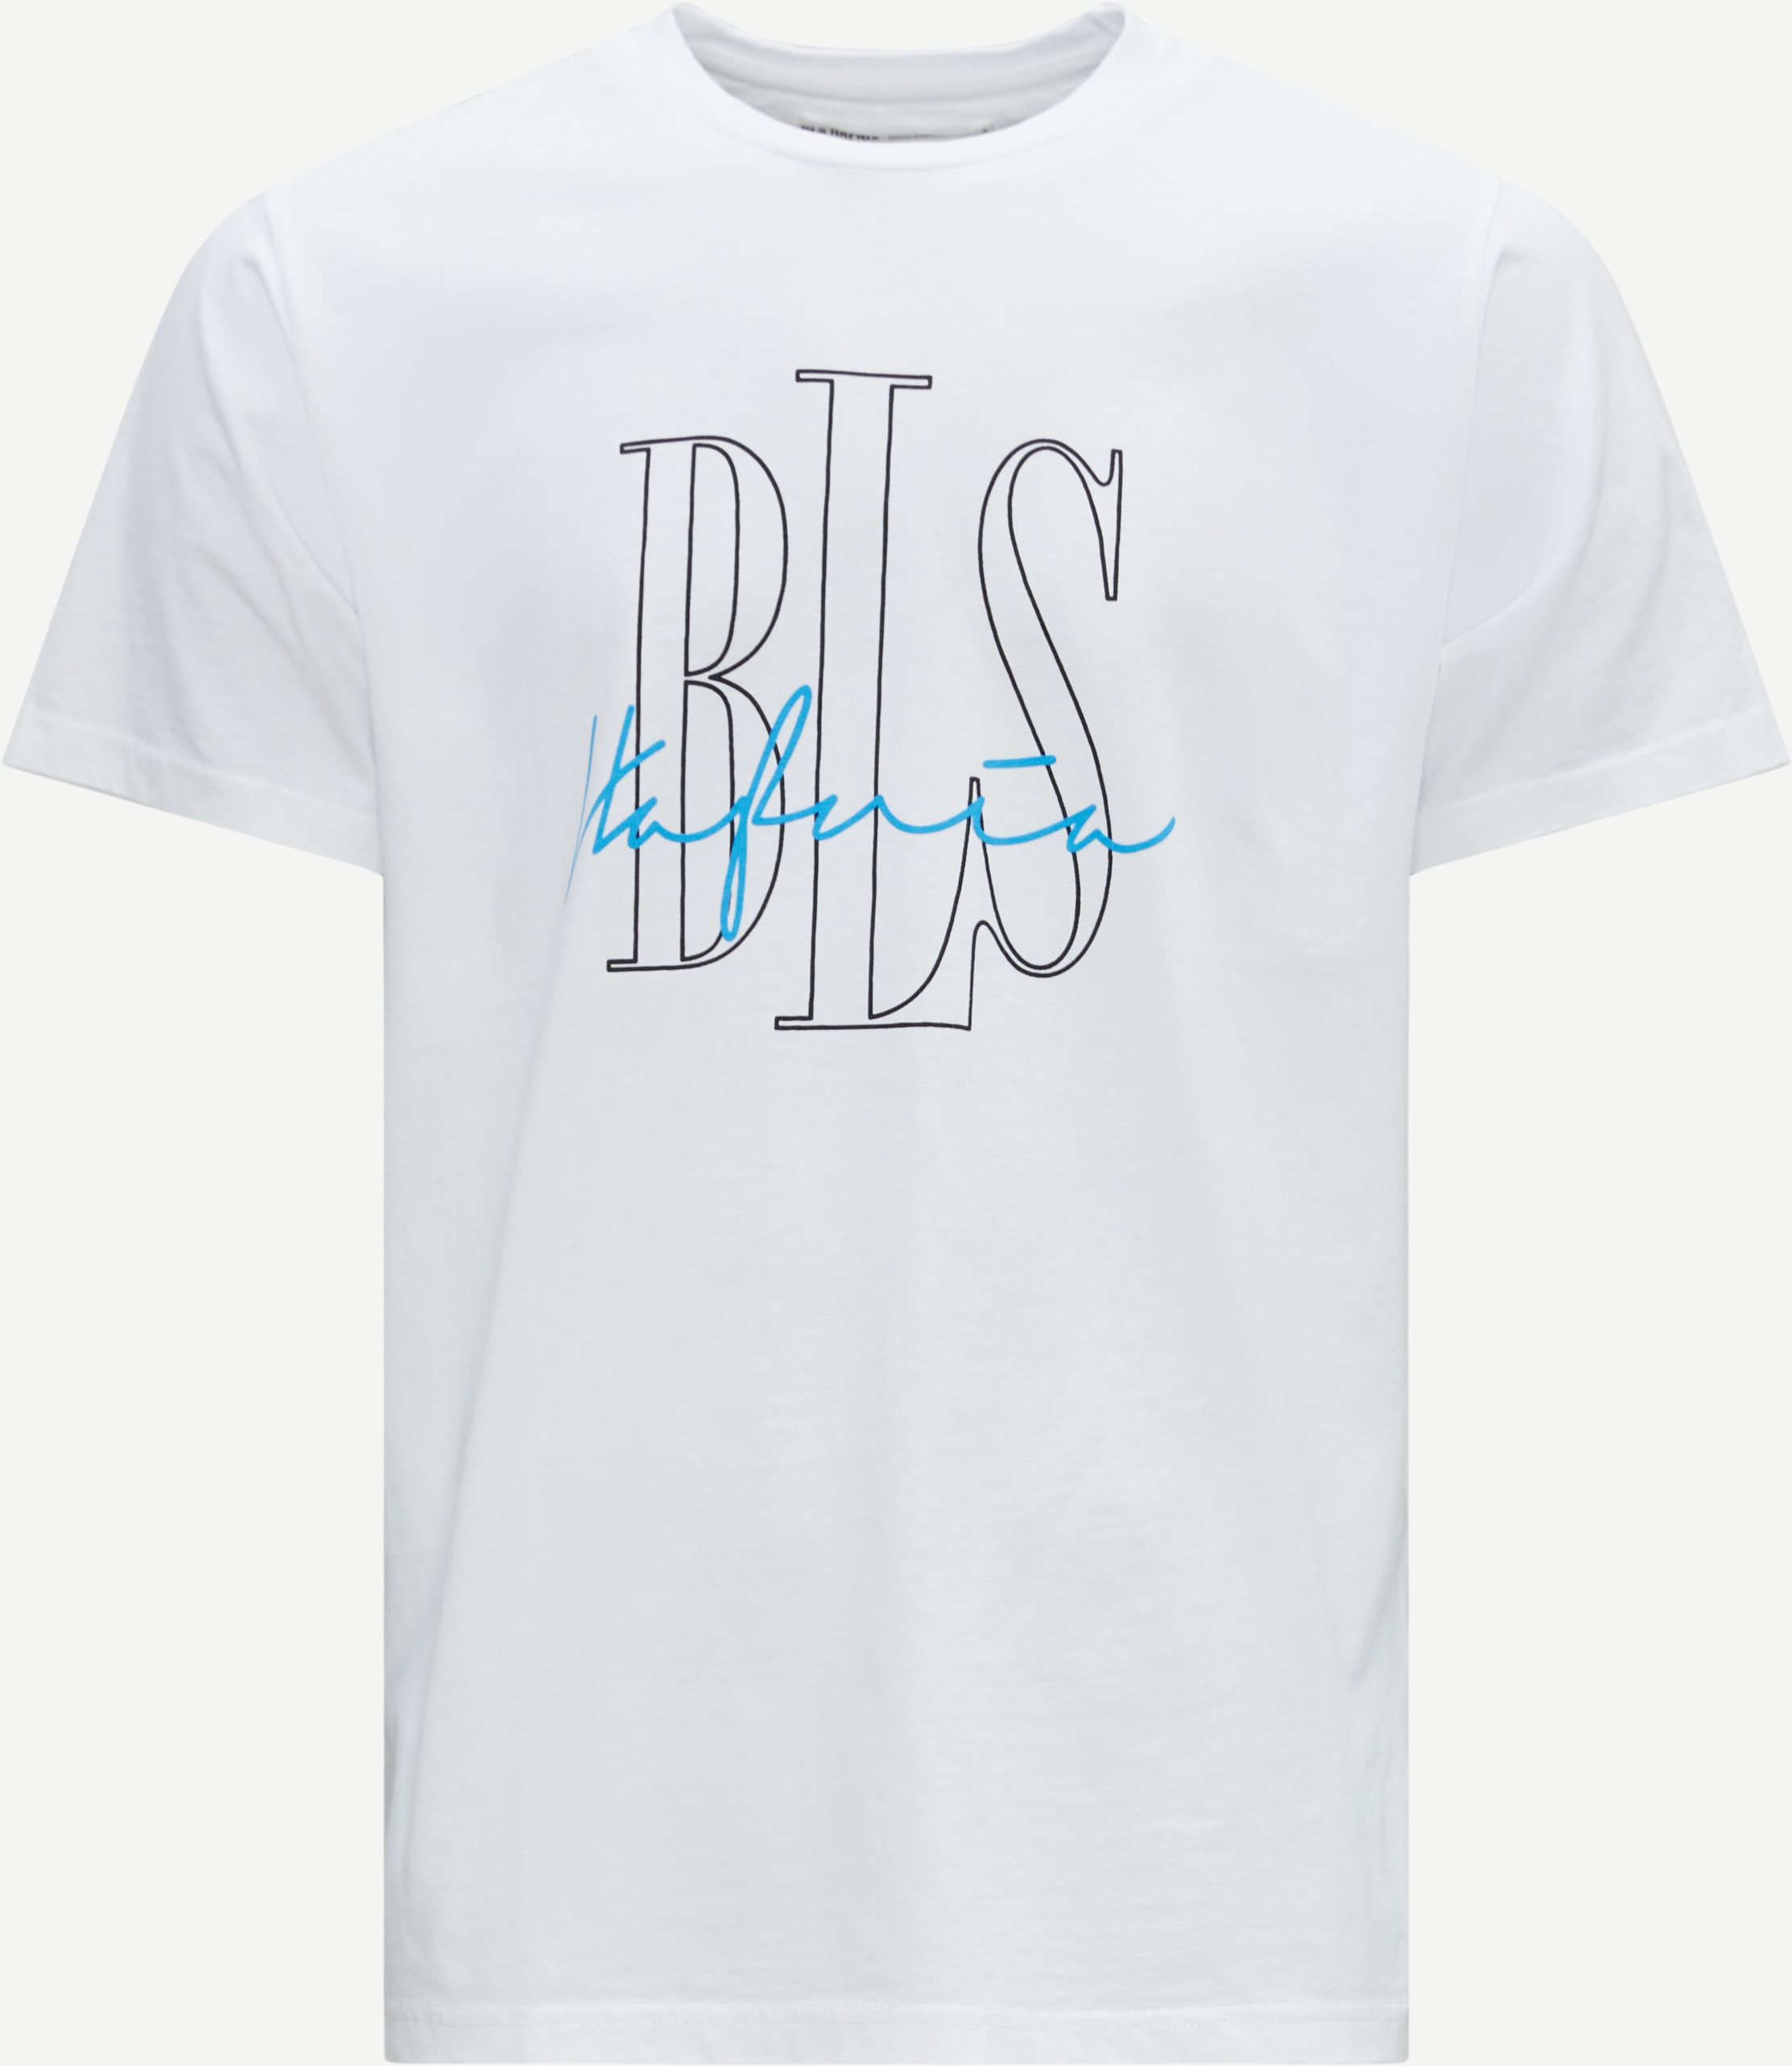 BLS T-shirts OUTLINE LOGO 2 T-SHIRT 202208082 White